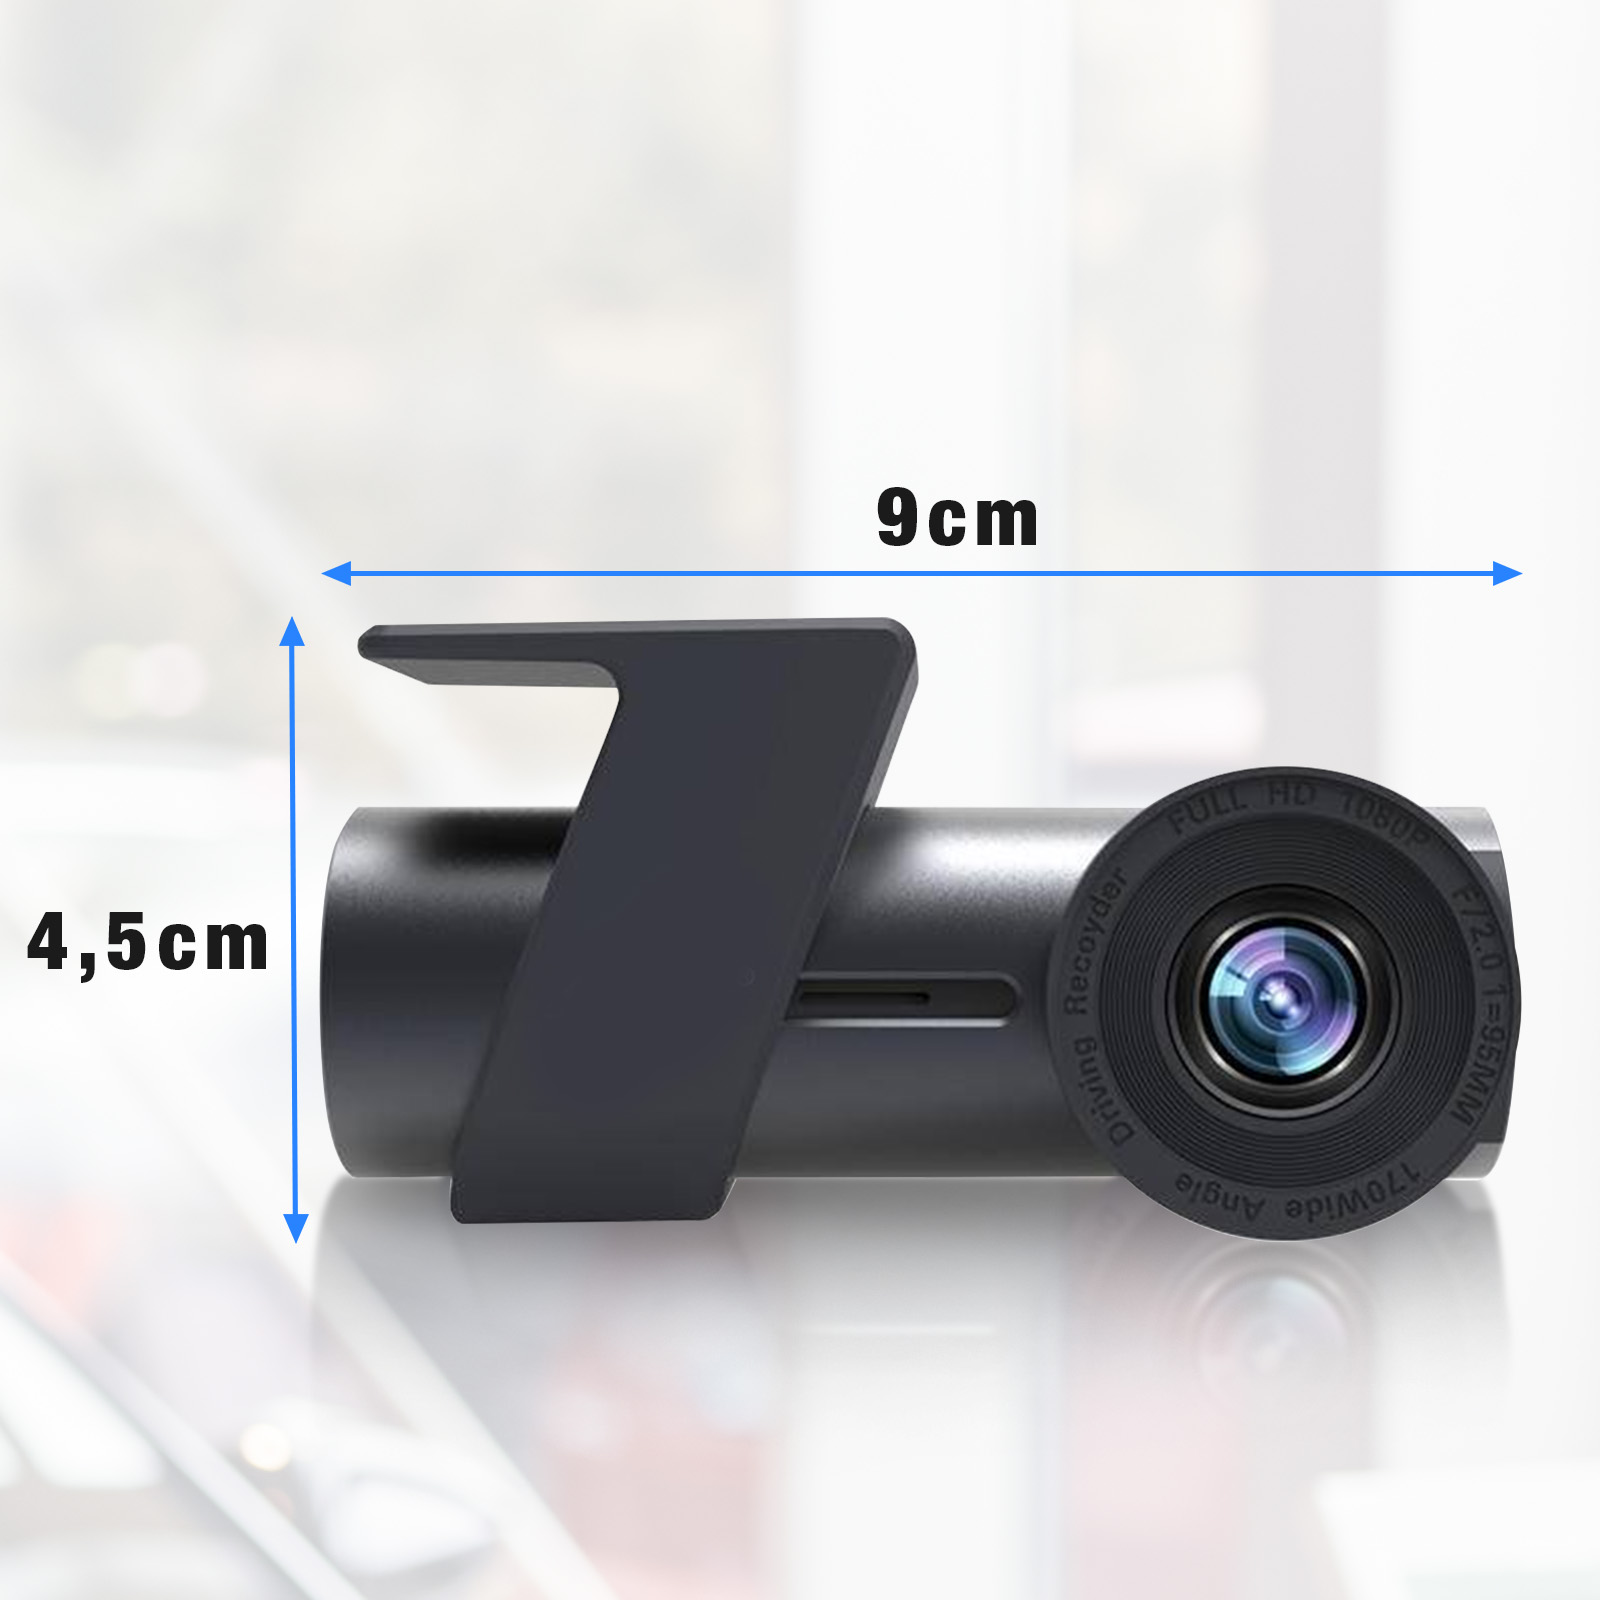 Dashcam Full HD 1080p, Caméra Voiture avec Micro, Rotation 360